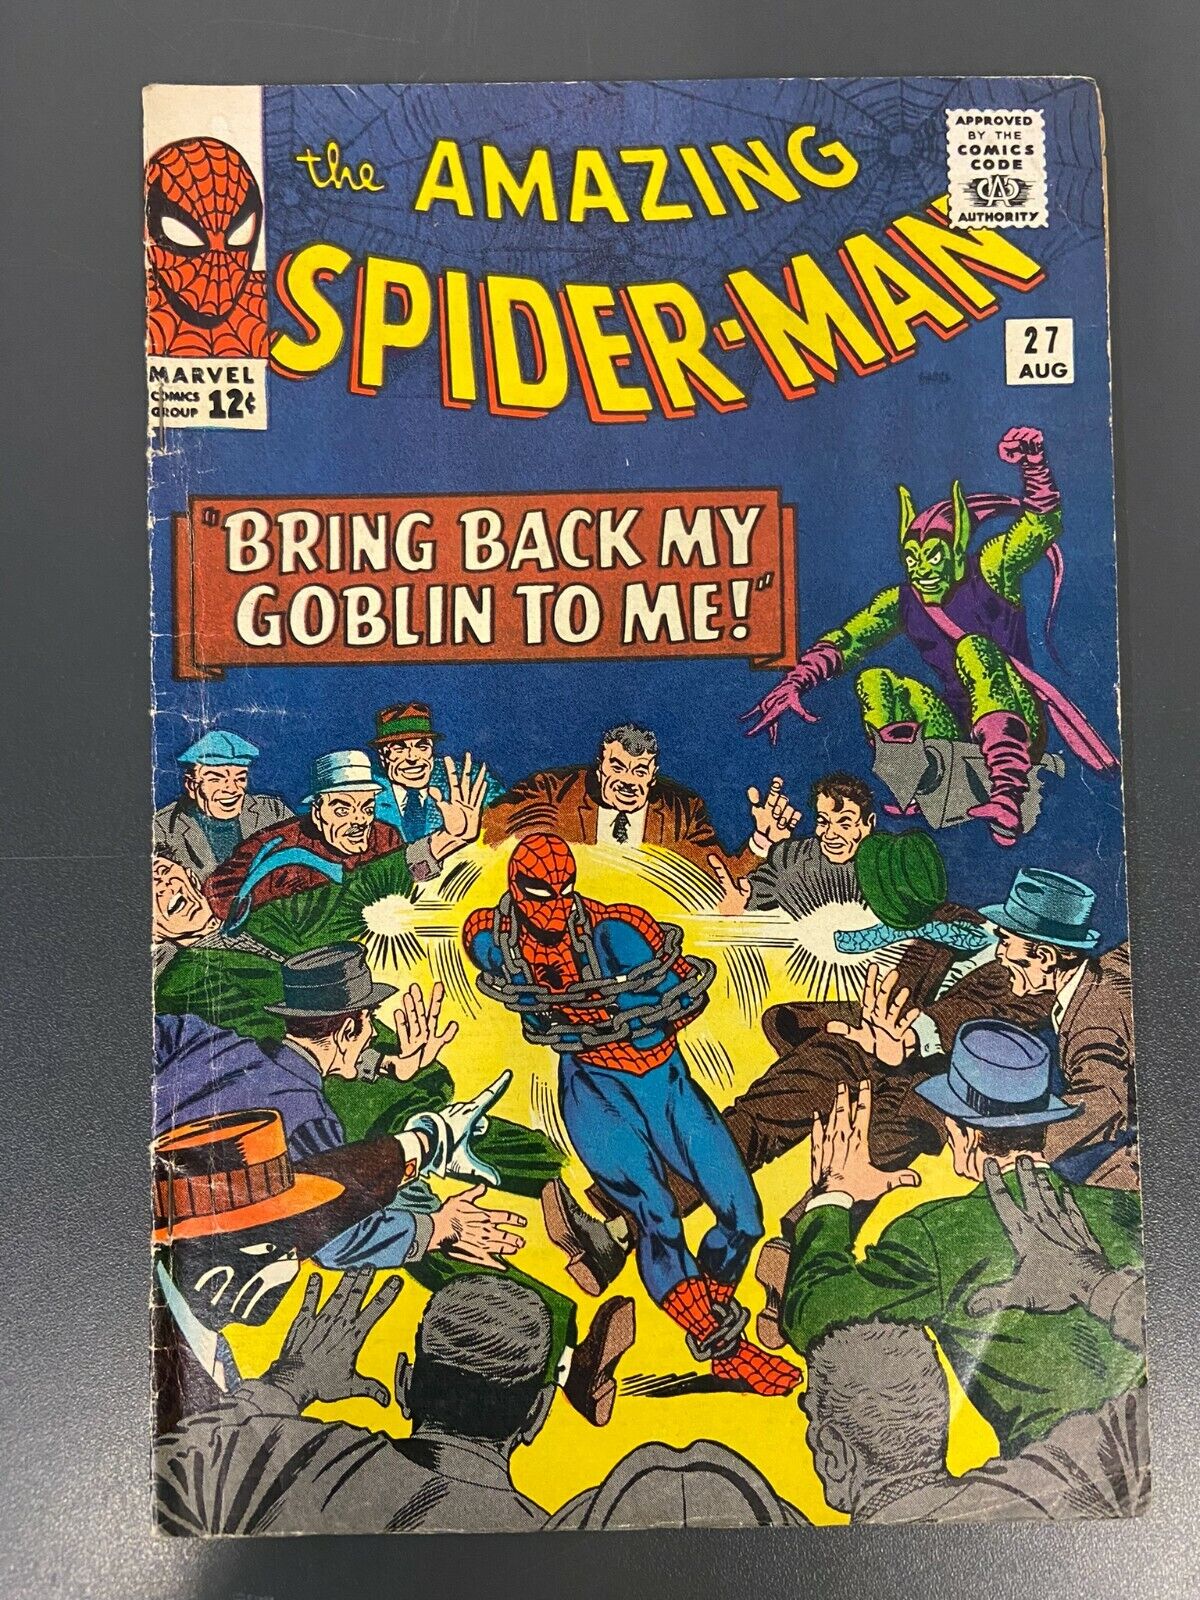 Amazing Spider-Man #27 (Marvel 1965) VG+ 4.5